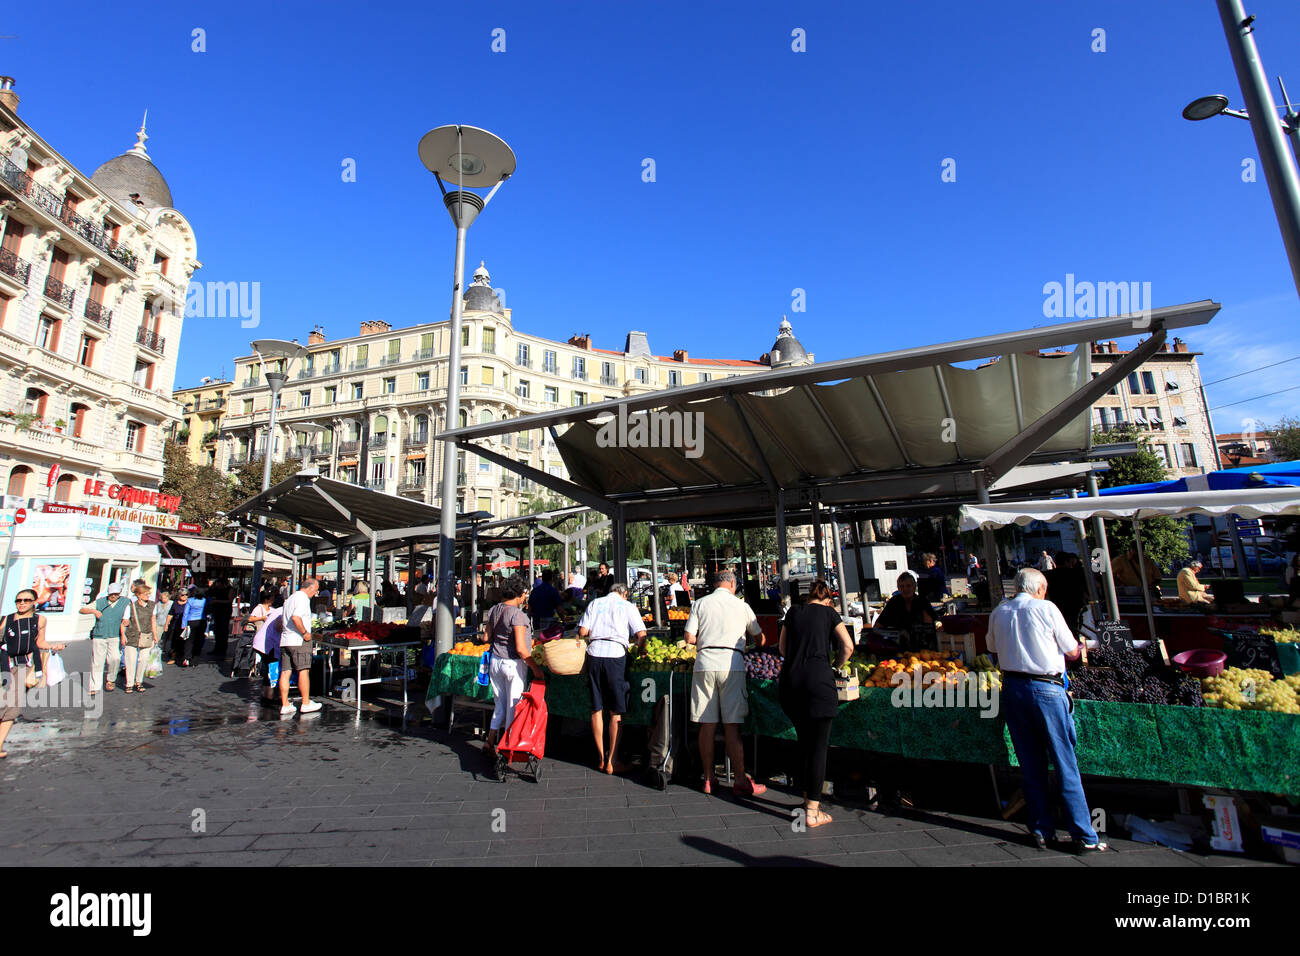 The popular market of La Liberation in Nice city Stock Photo